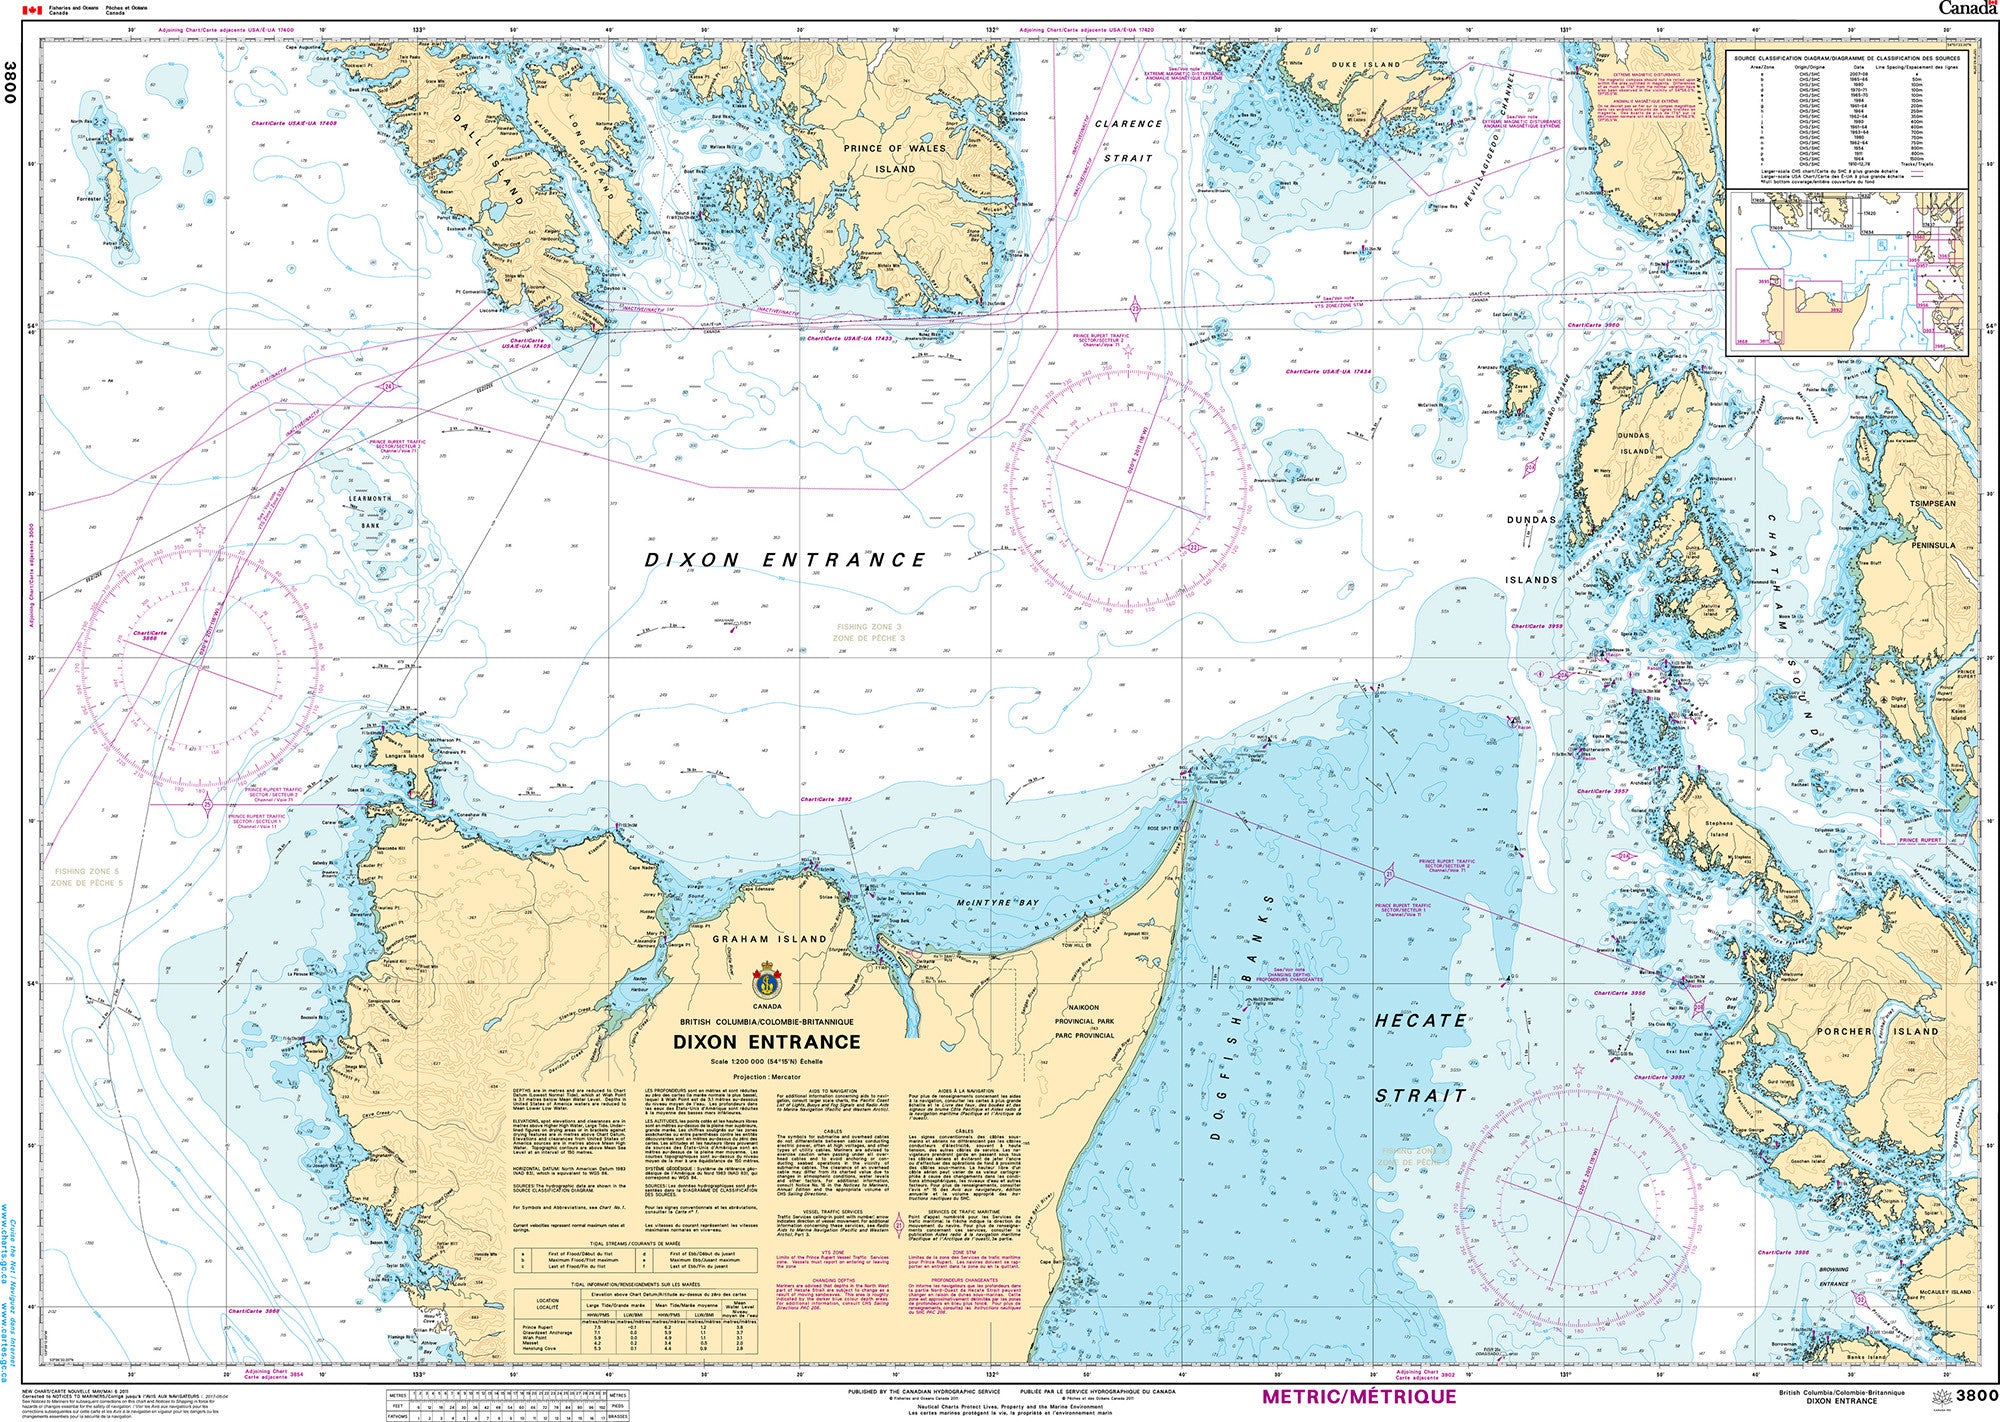 Canadian Hydrographic Service Nautical Chart CHS3800: Dixon Entrance